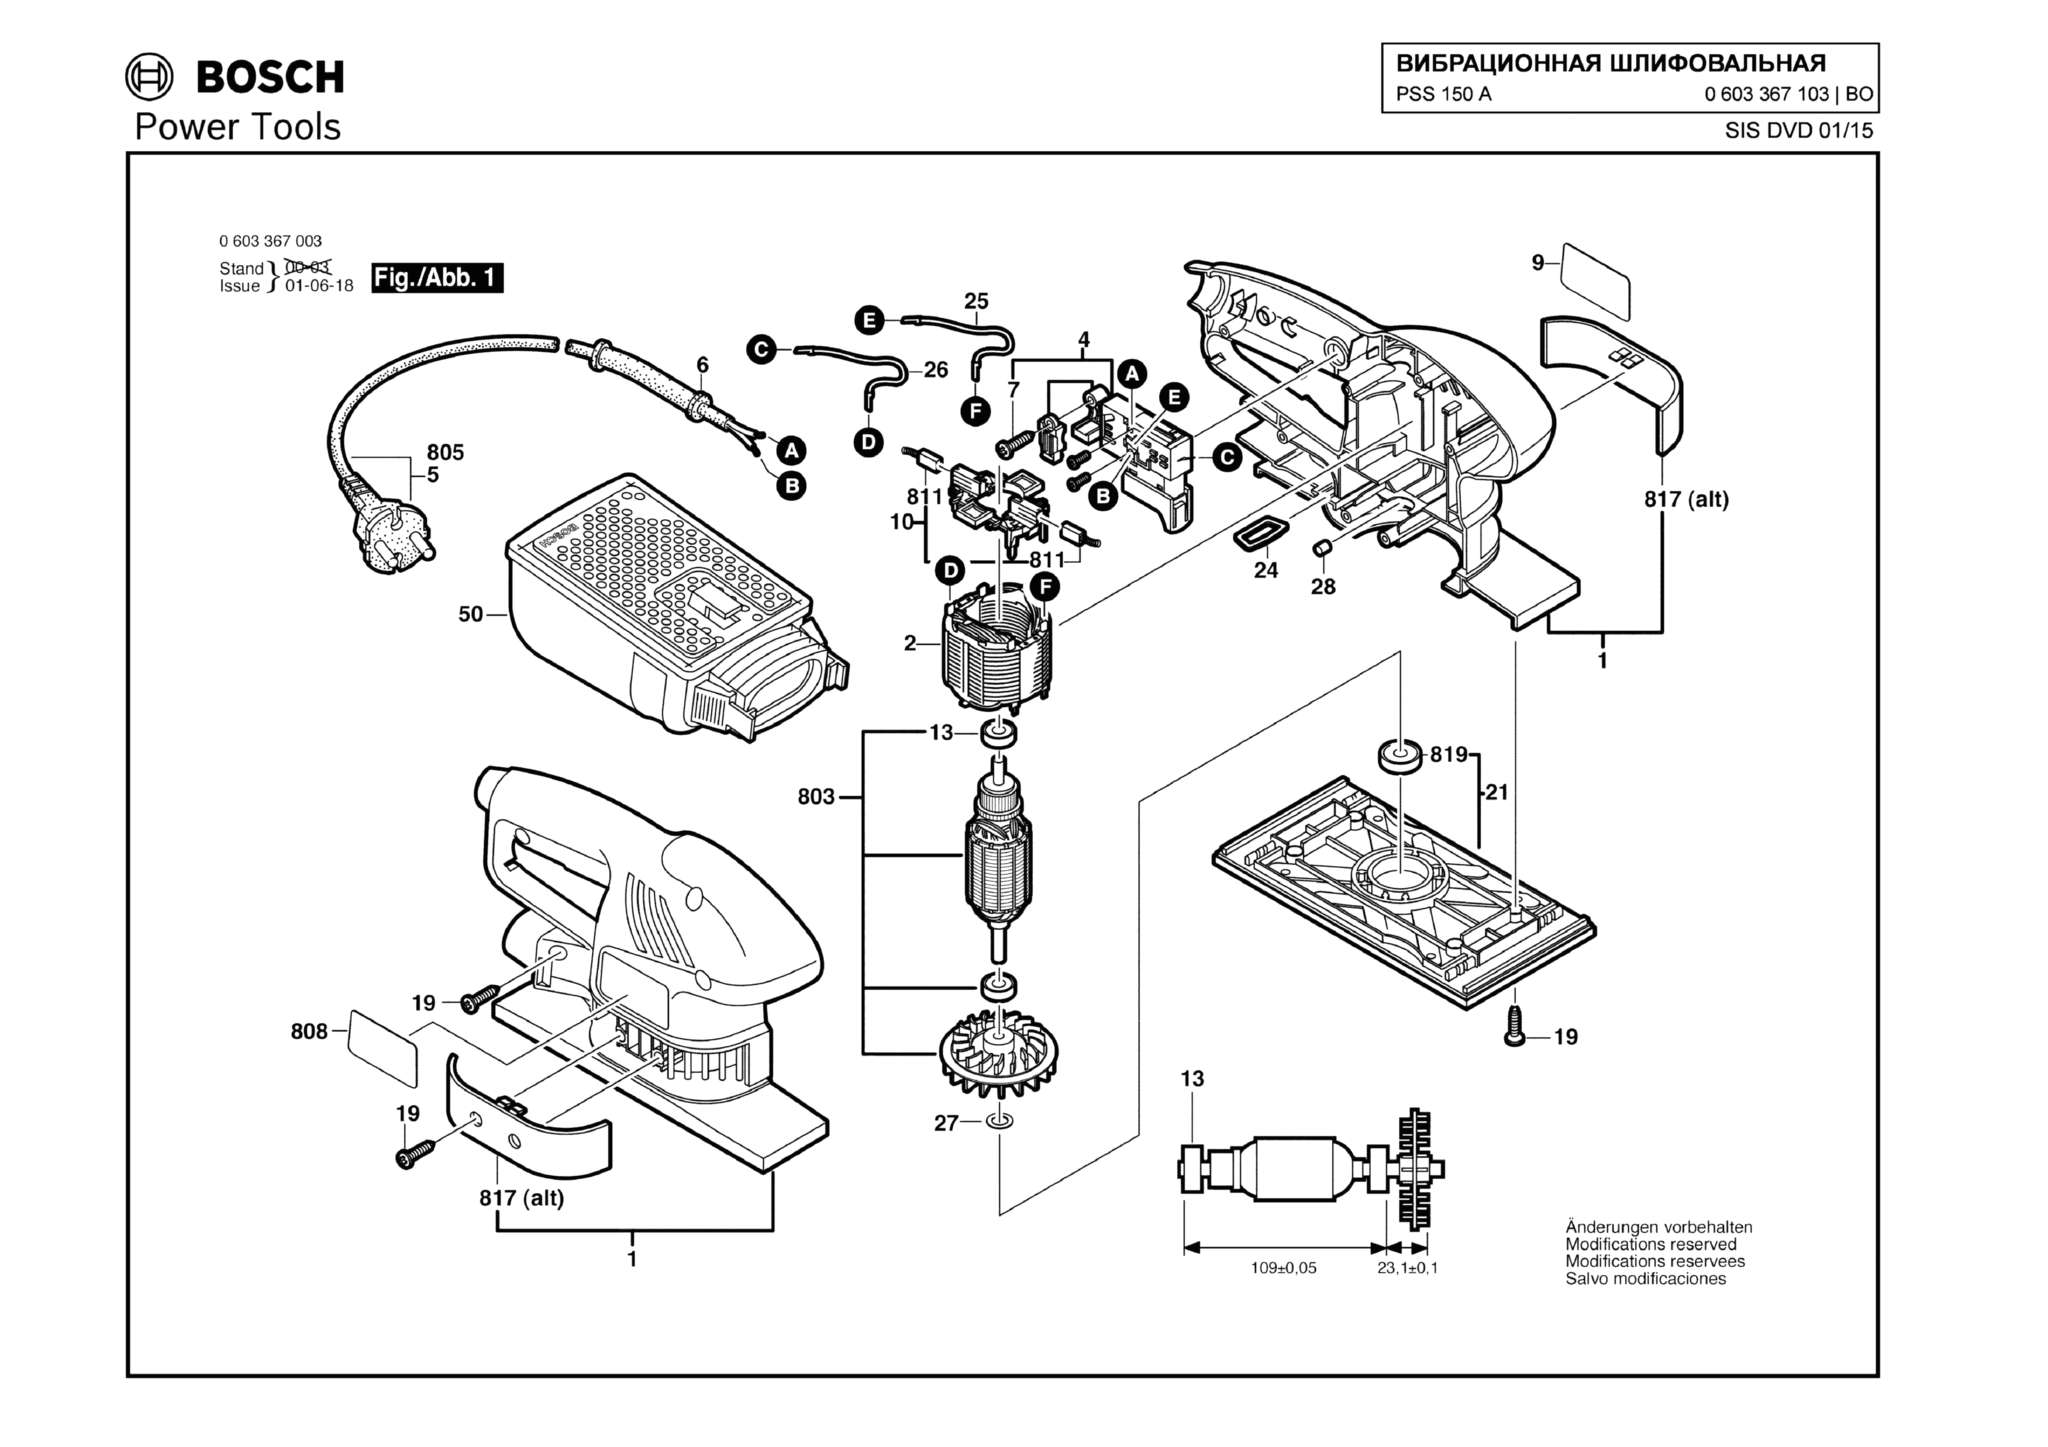 Запчасти, схема и деталировка Bosch PSS 150 A (ТИП 0603367103)